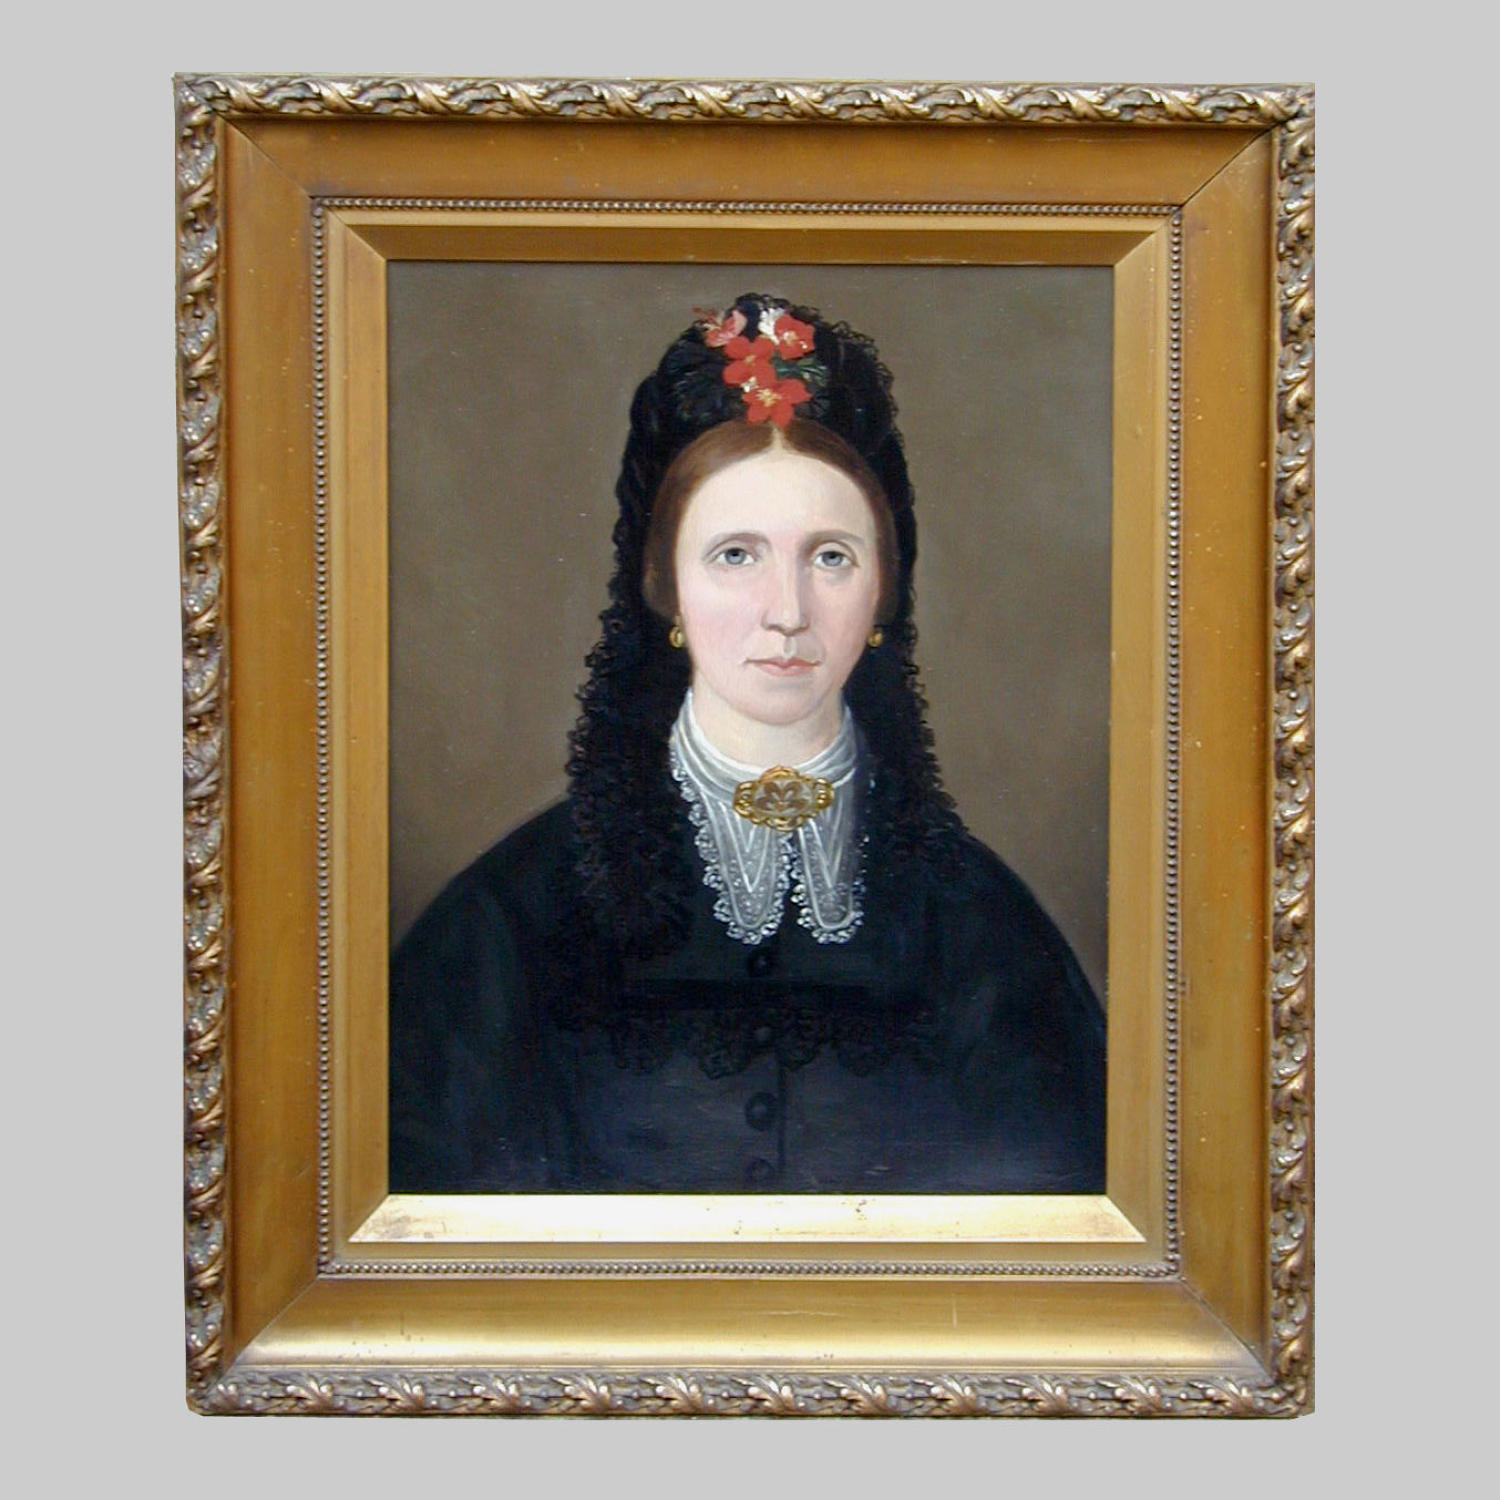 Primitive portrait oil painting of a lady by Percival Novice